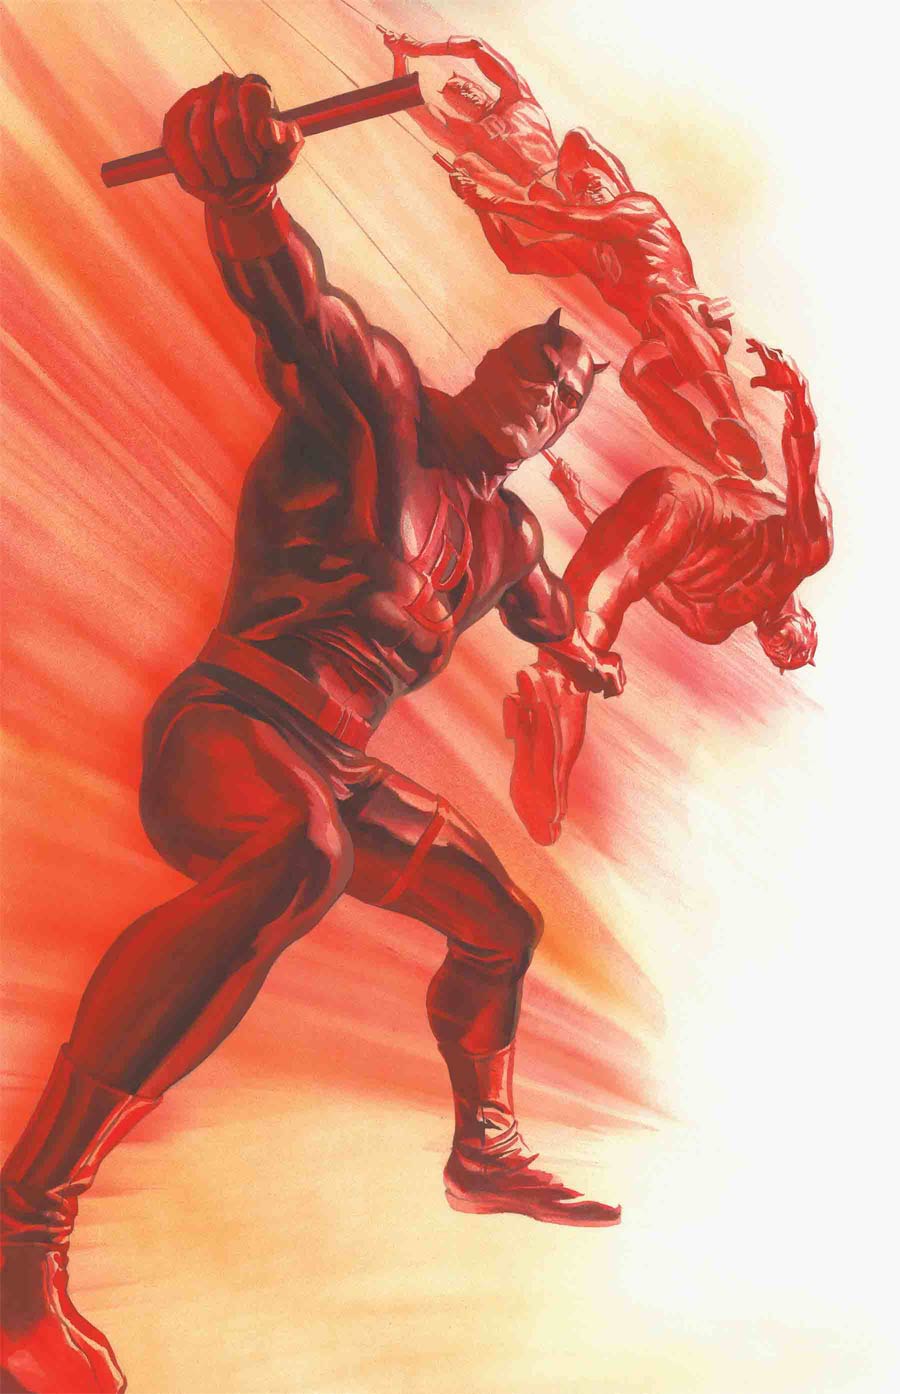 Daredevil Vol 5 #600 By Alex Ross Poster